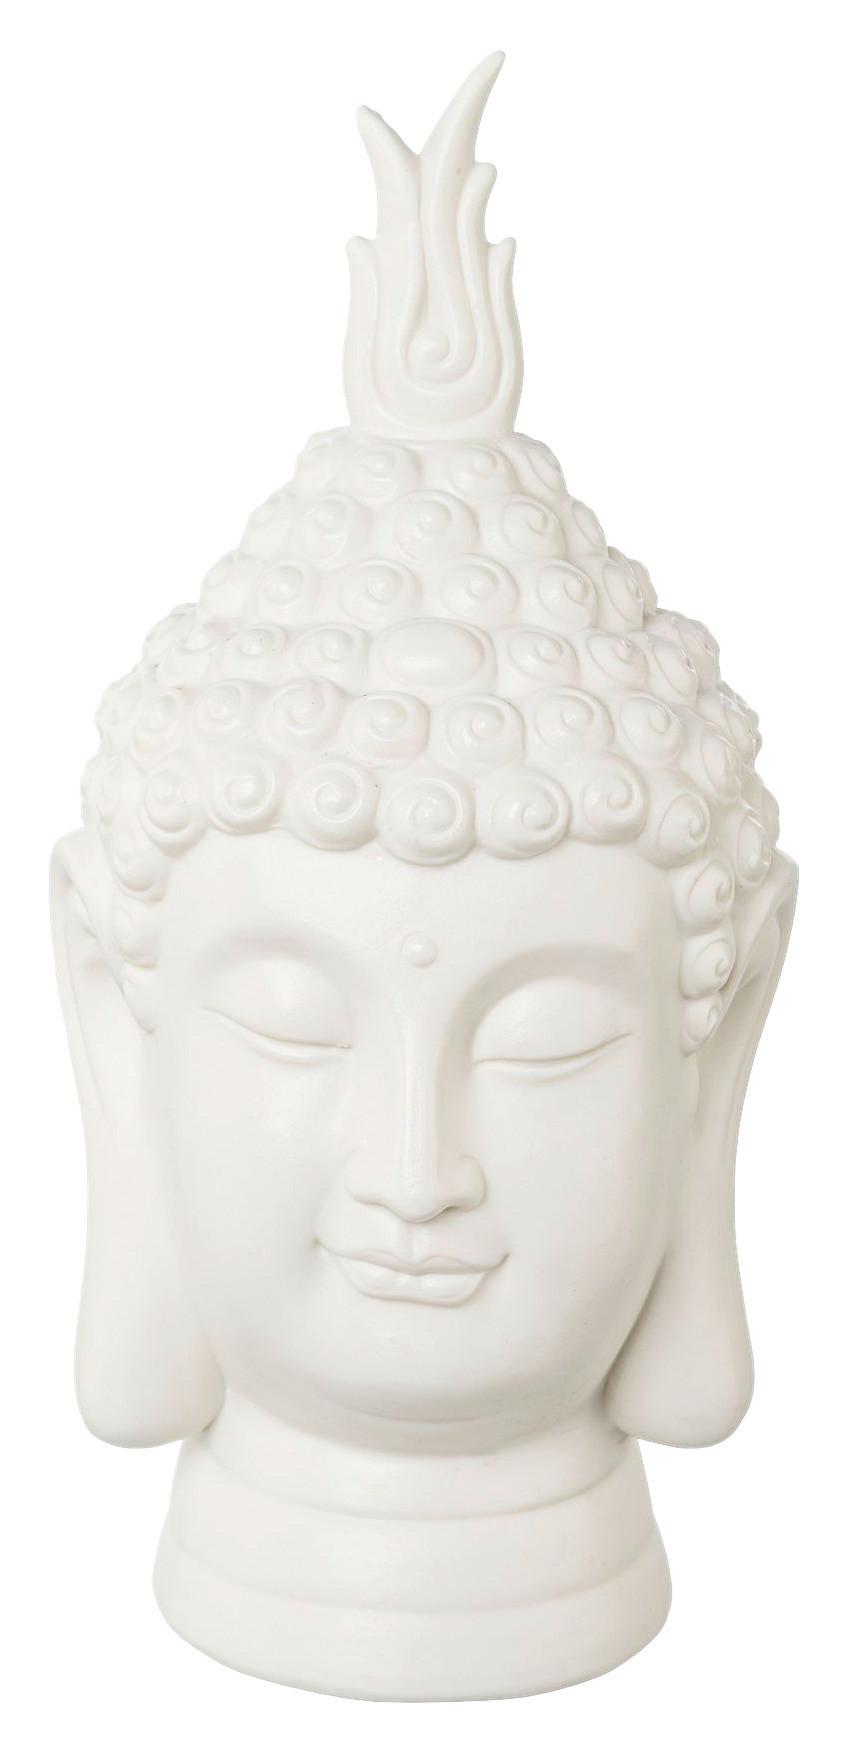 Buddhakopf Bright II mit Beleuchtung - Weiß, Design, Keramik (21,5cm)